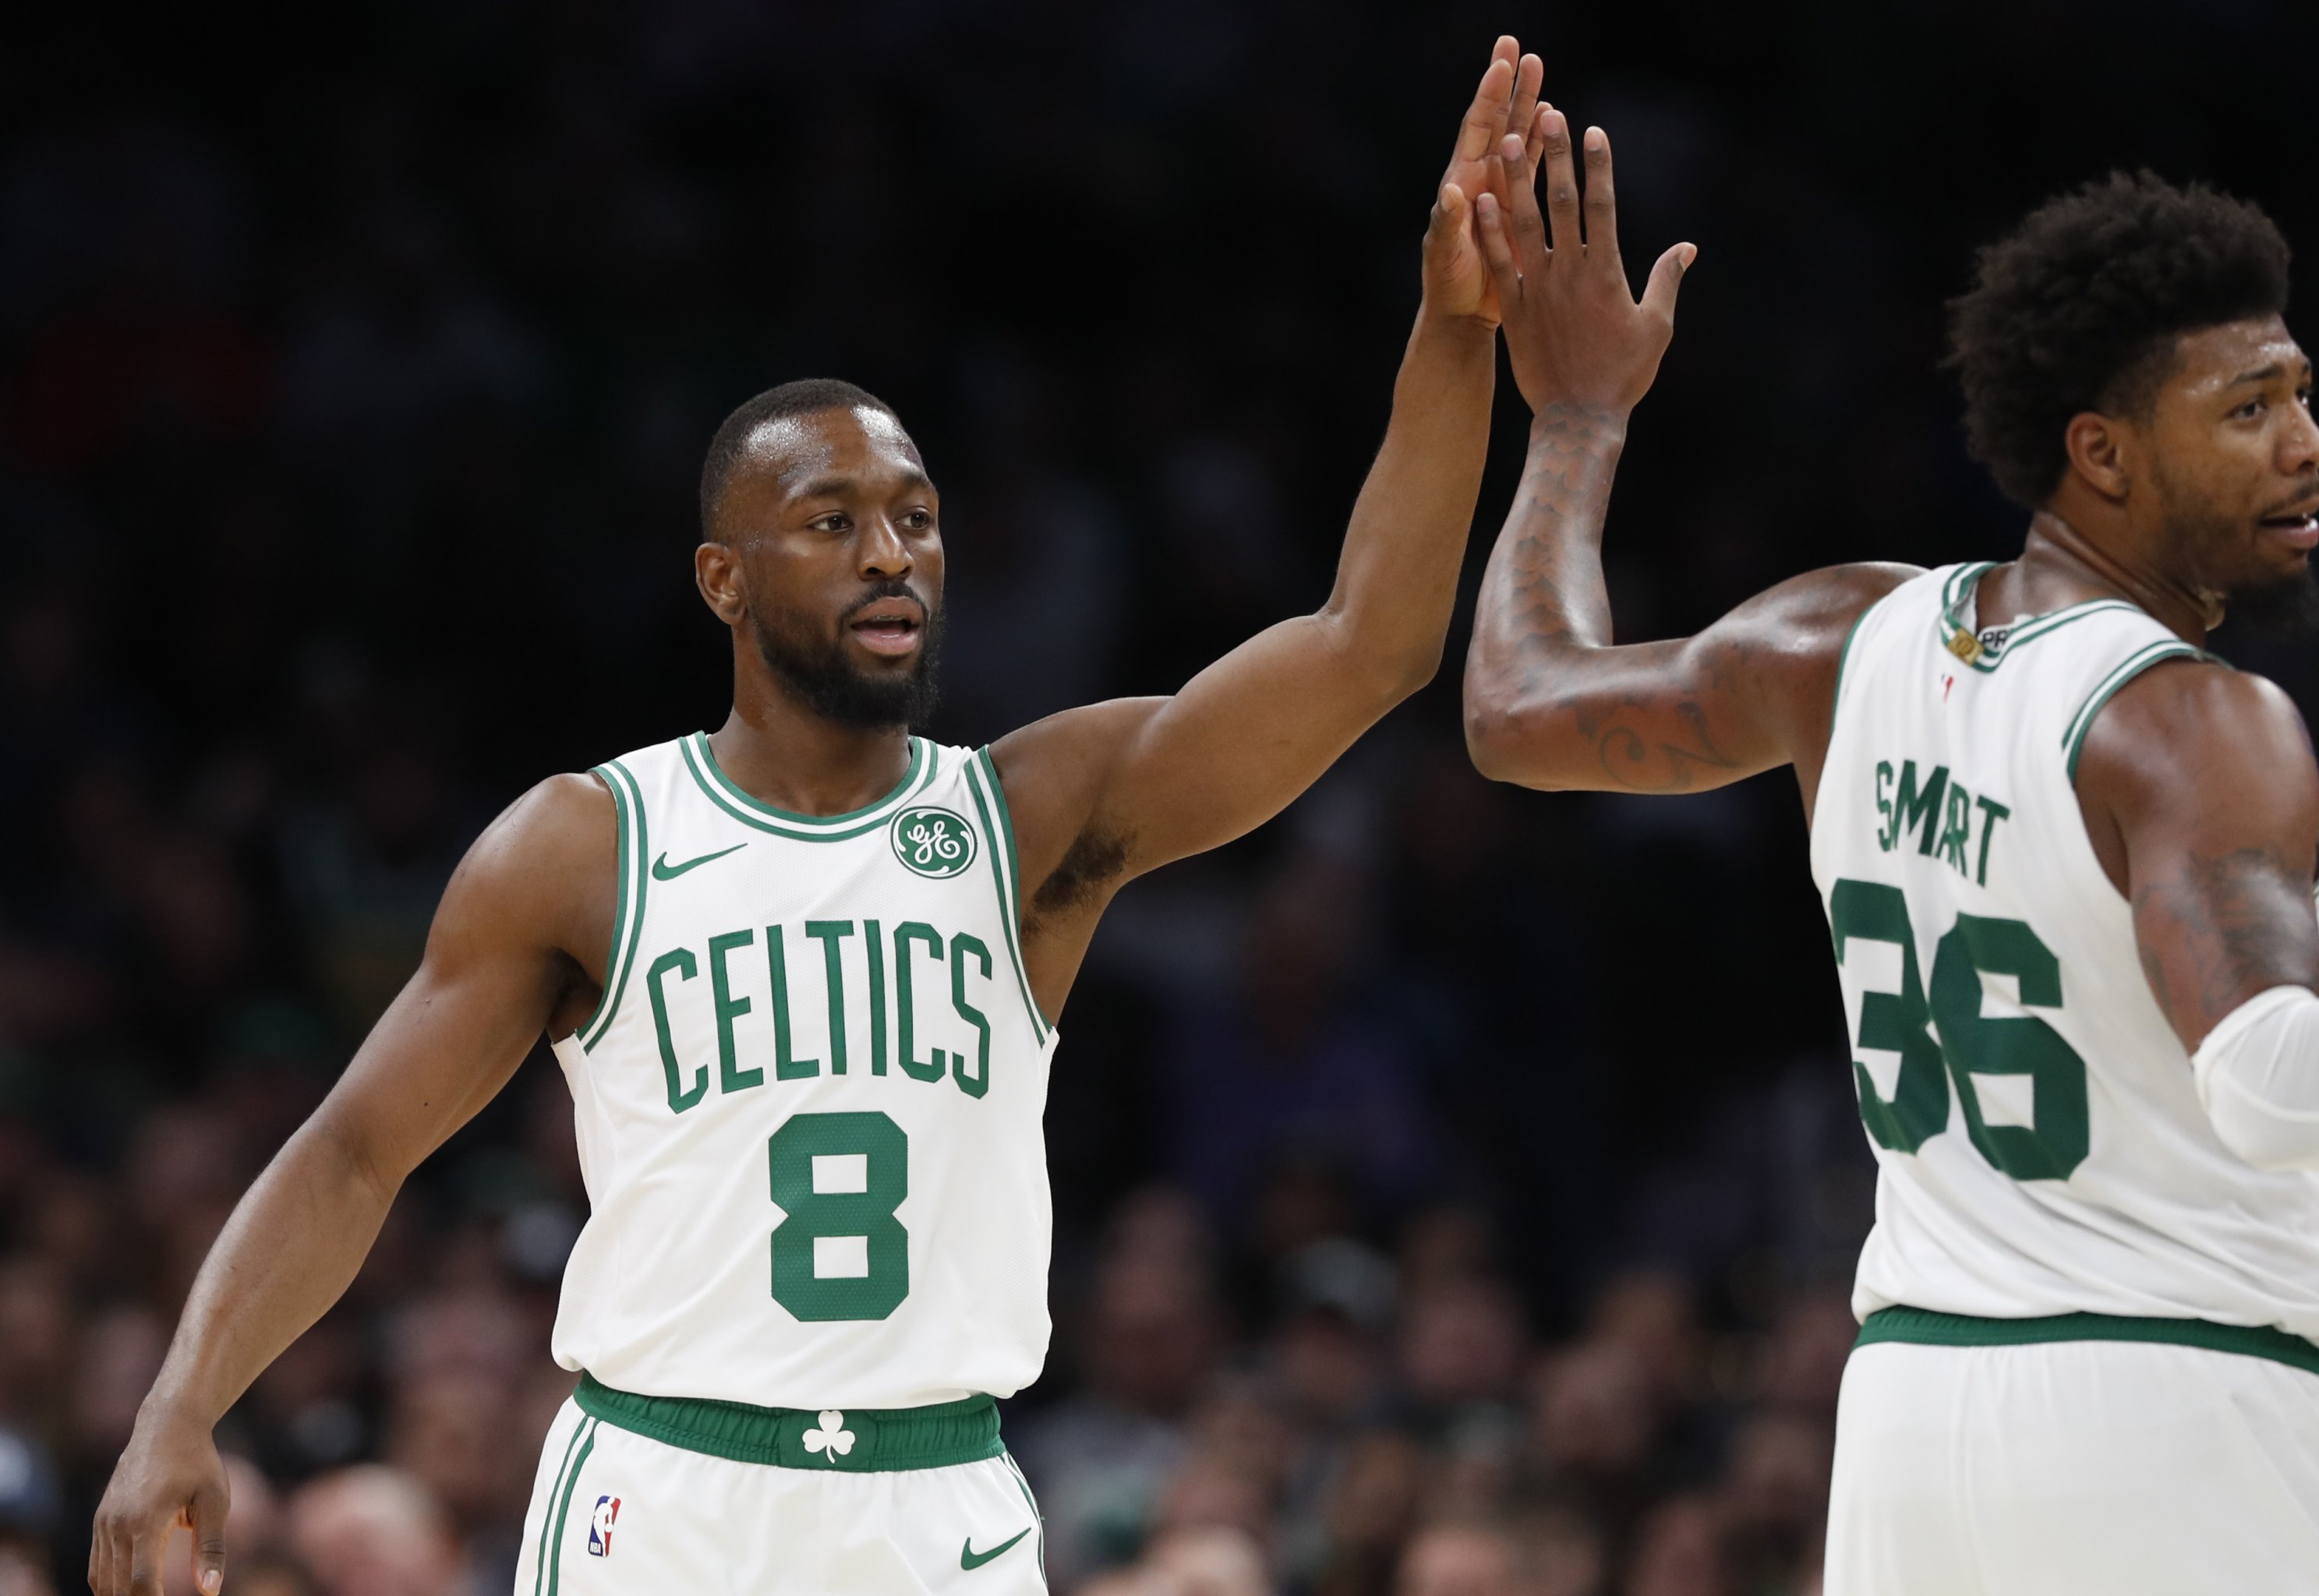 Vistaprint replaces GE on Celtics jerseys - Boston Business Journal